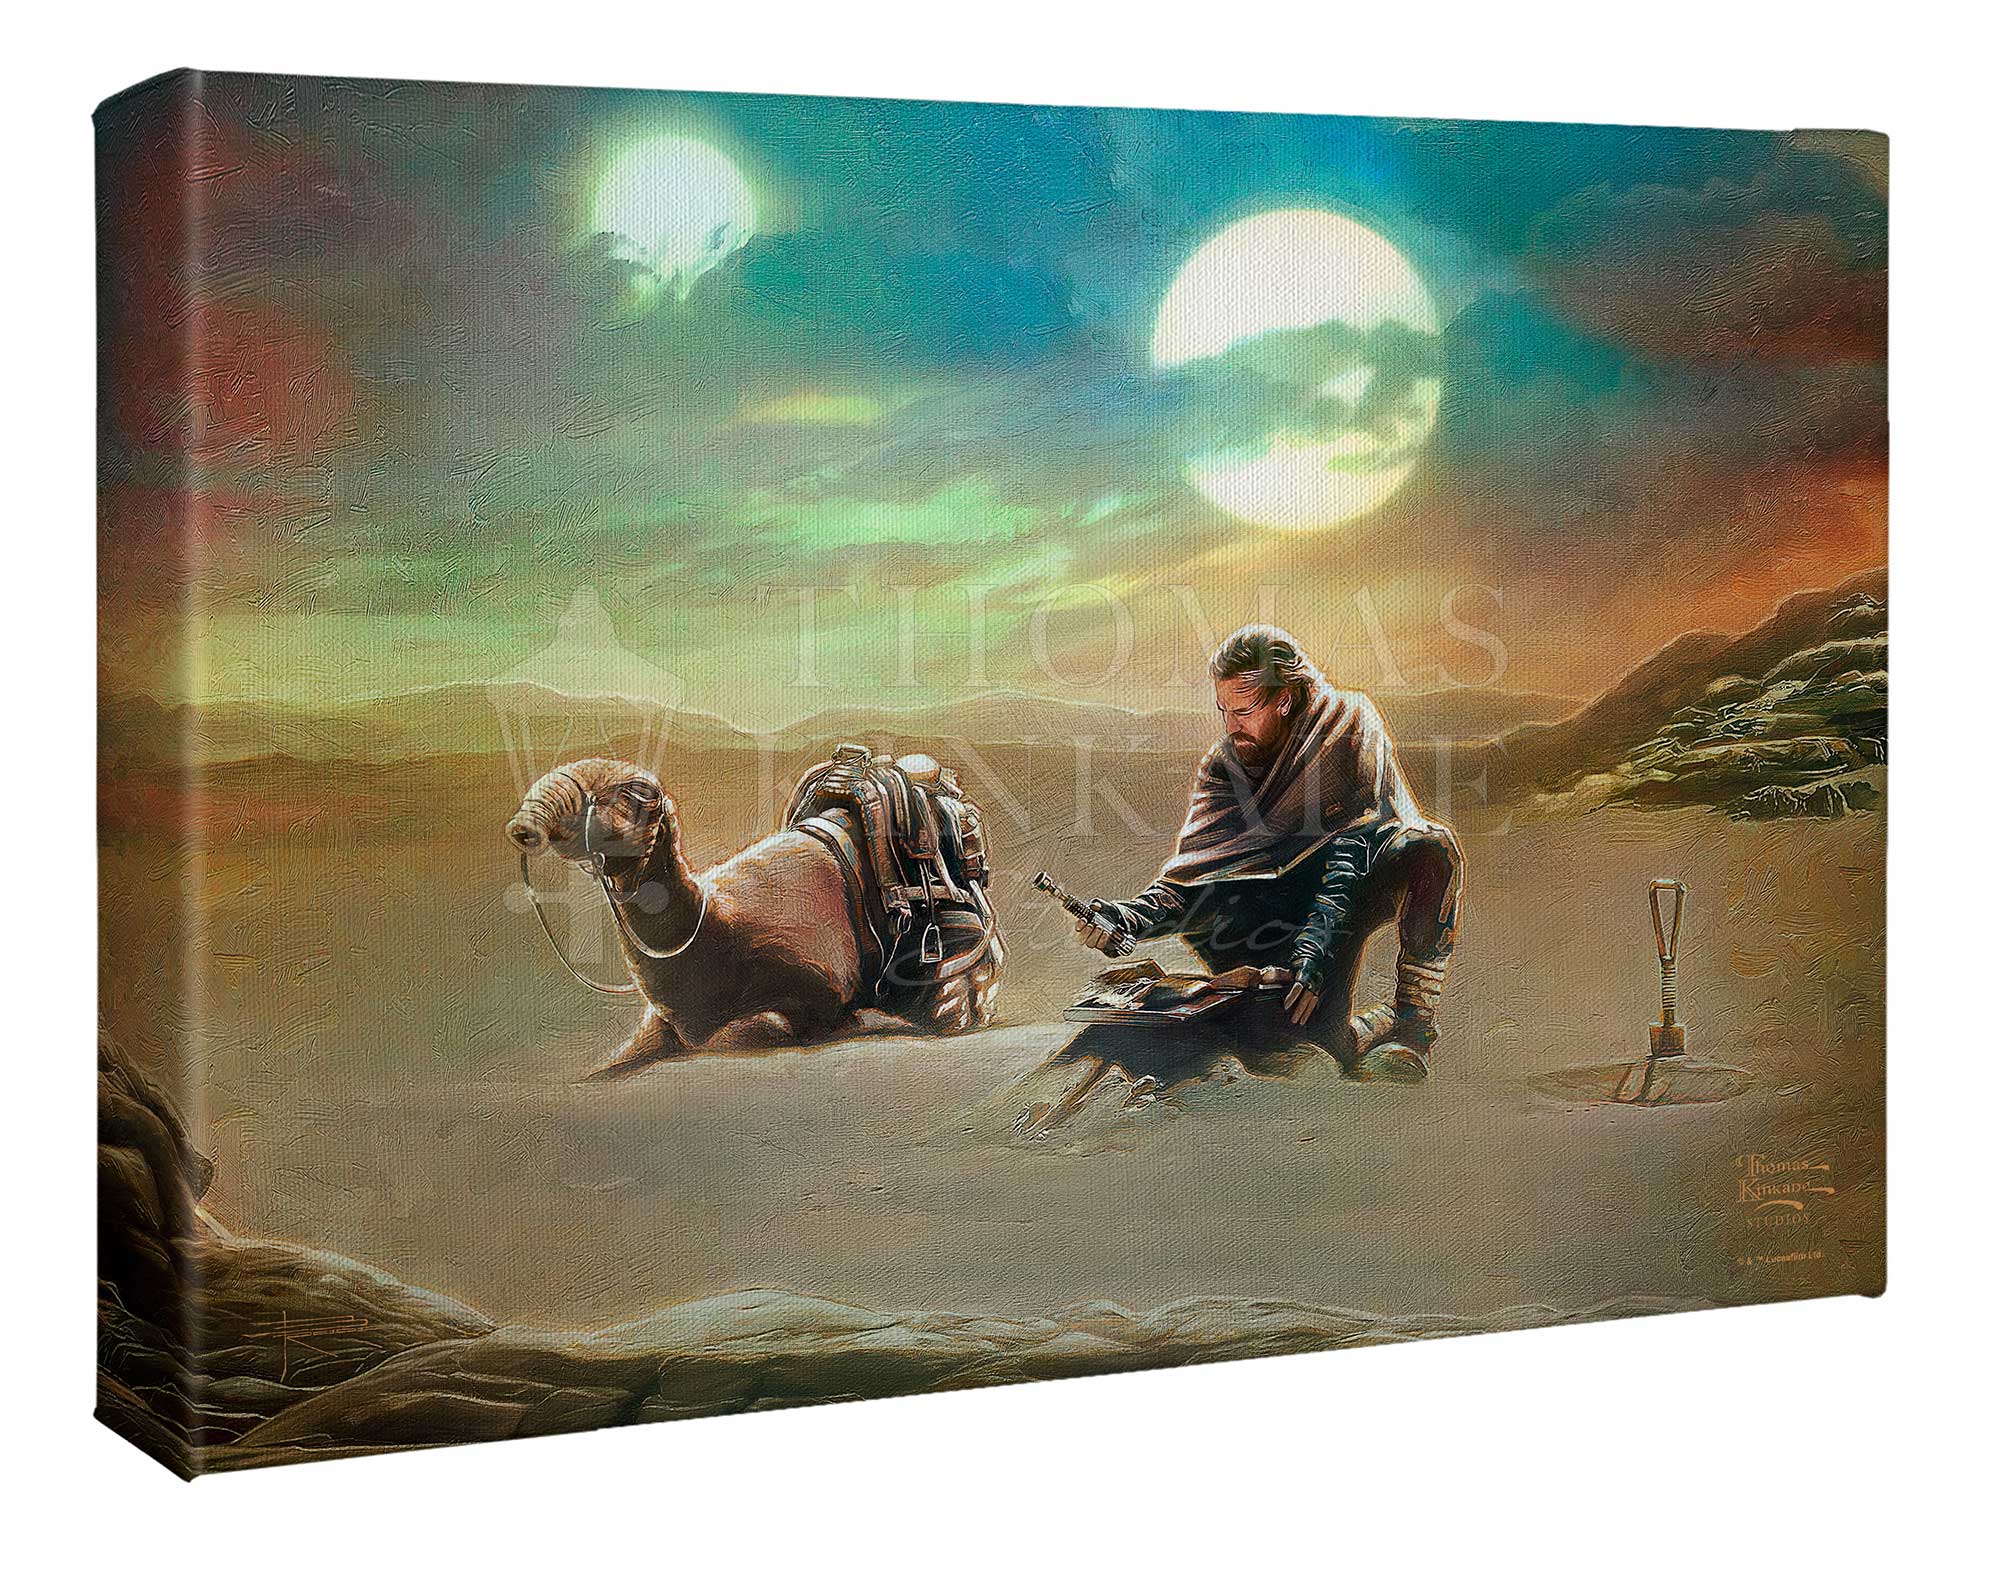 Obi-Wan Kenobi™ - Returning to His Past - 10" x 14" Gallery Wrapped Canvas